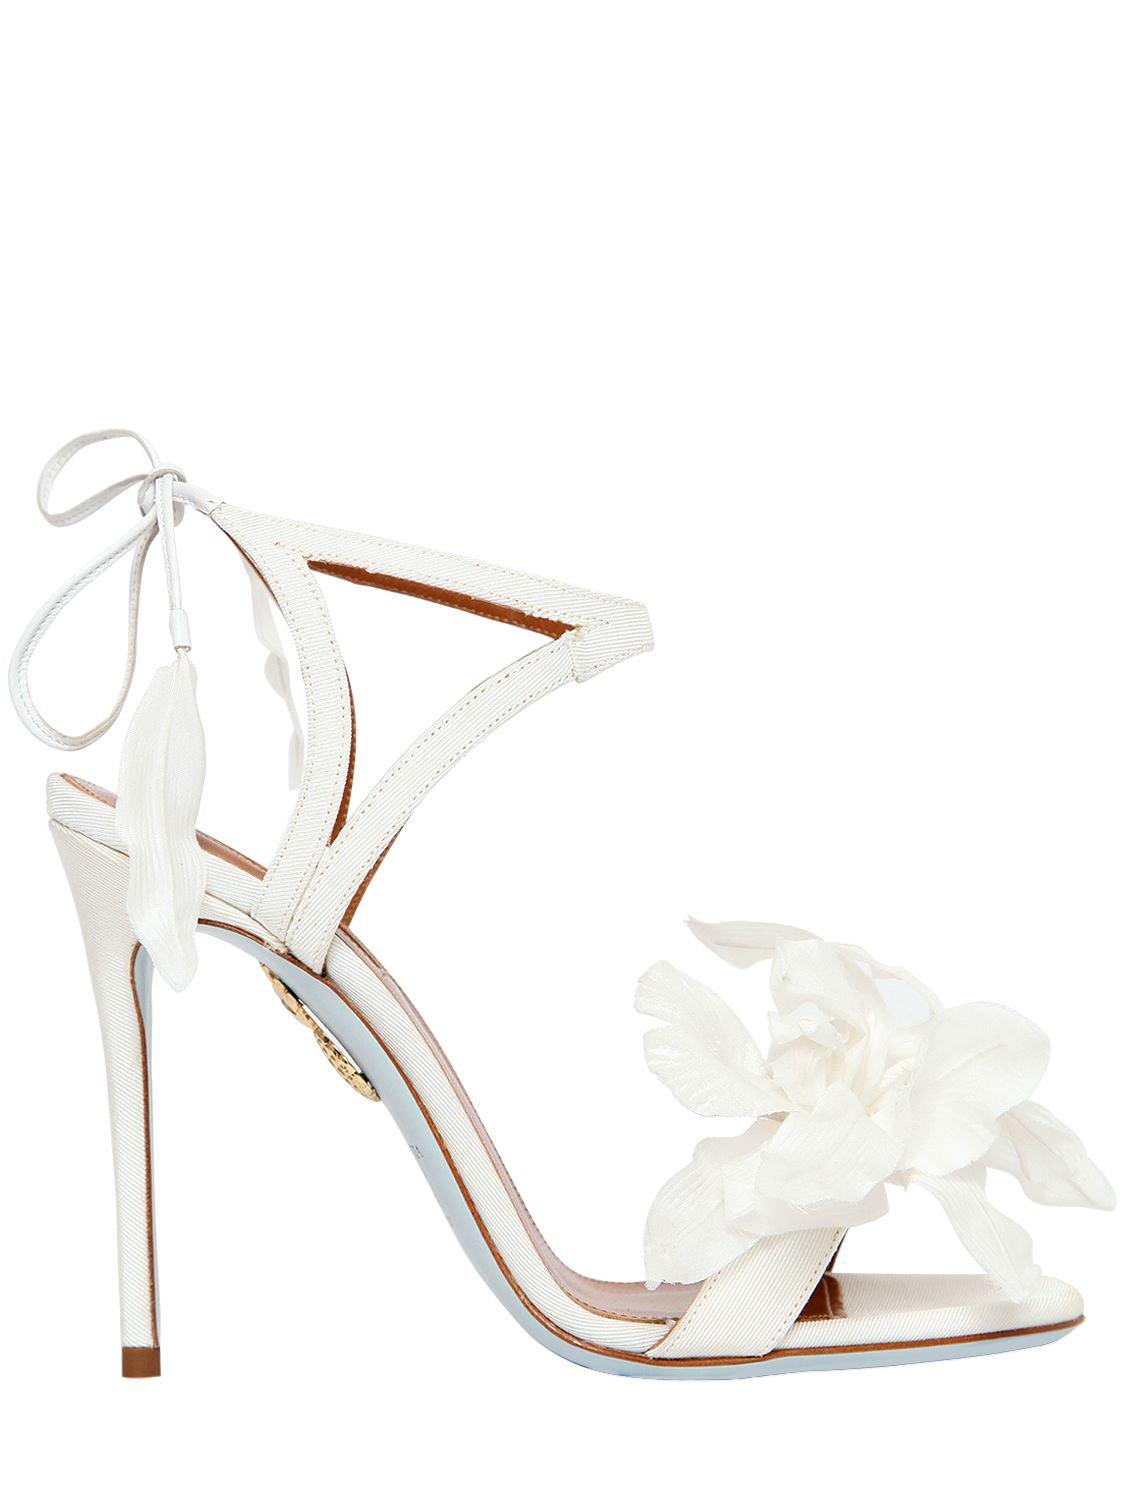 Aquazzura 105mm Floral Satin Bridal Sandals in White | Lyst